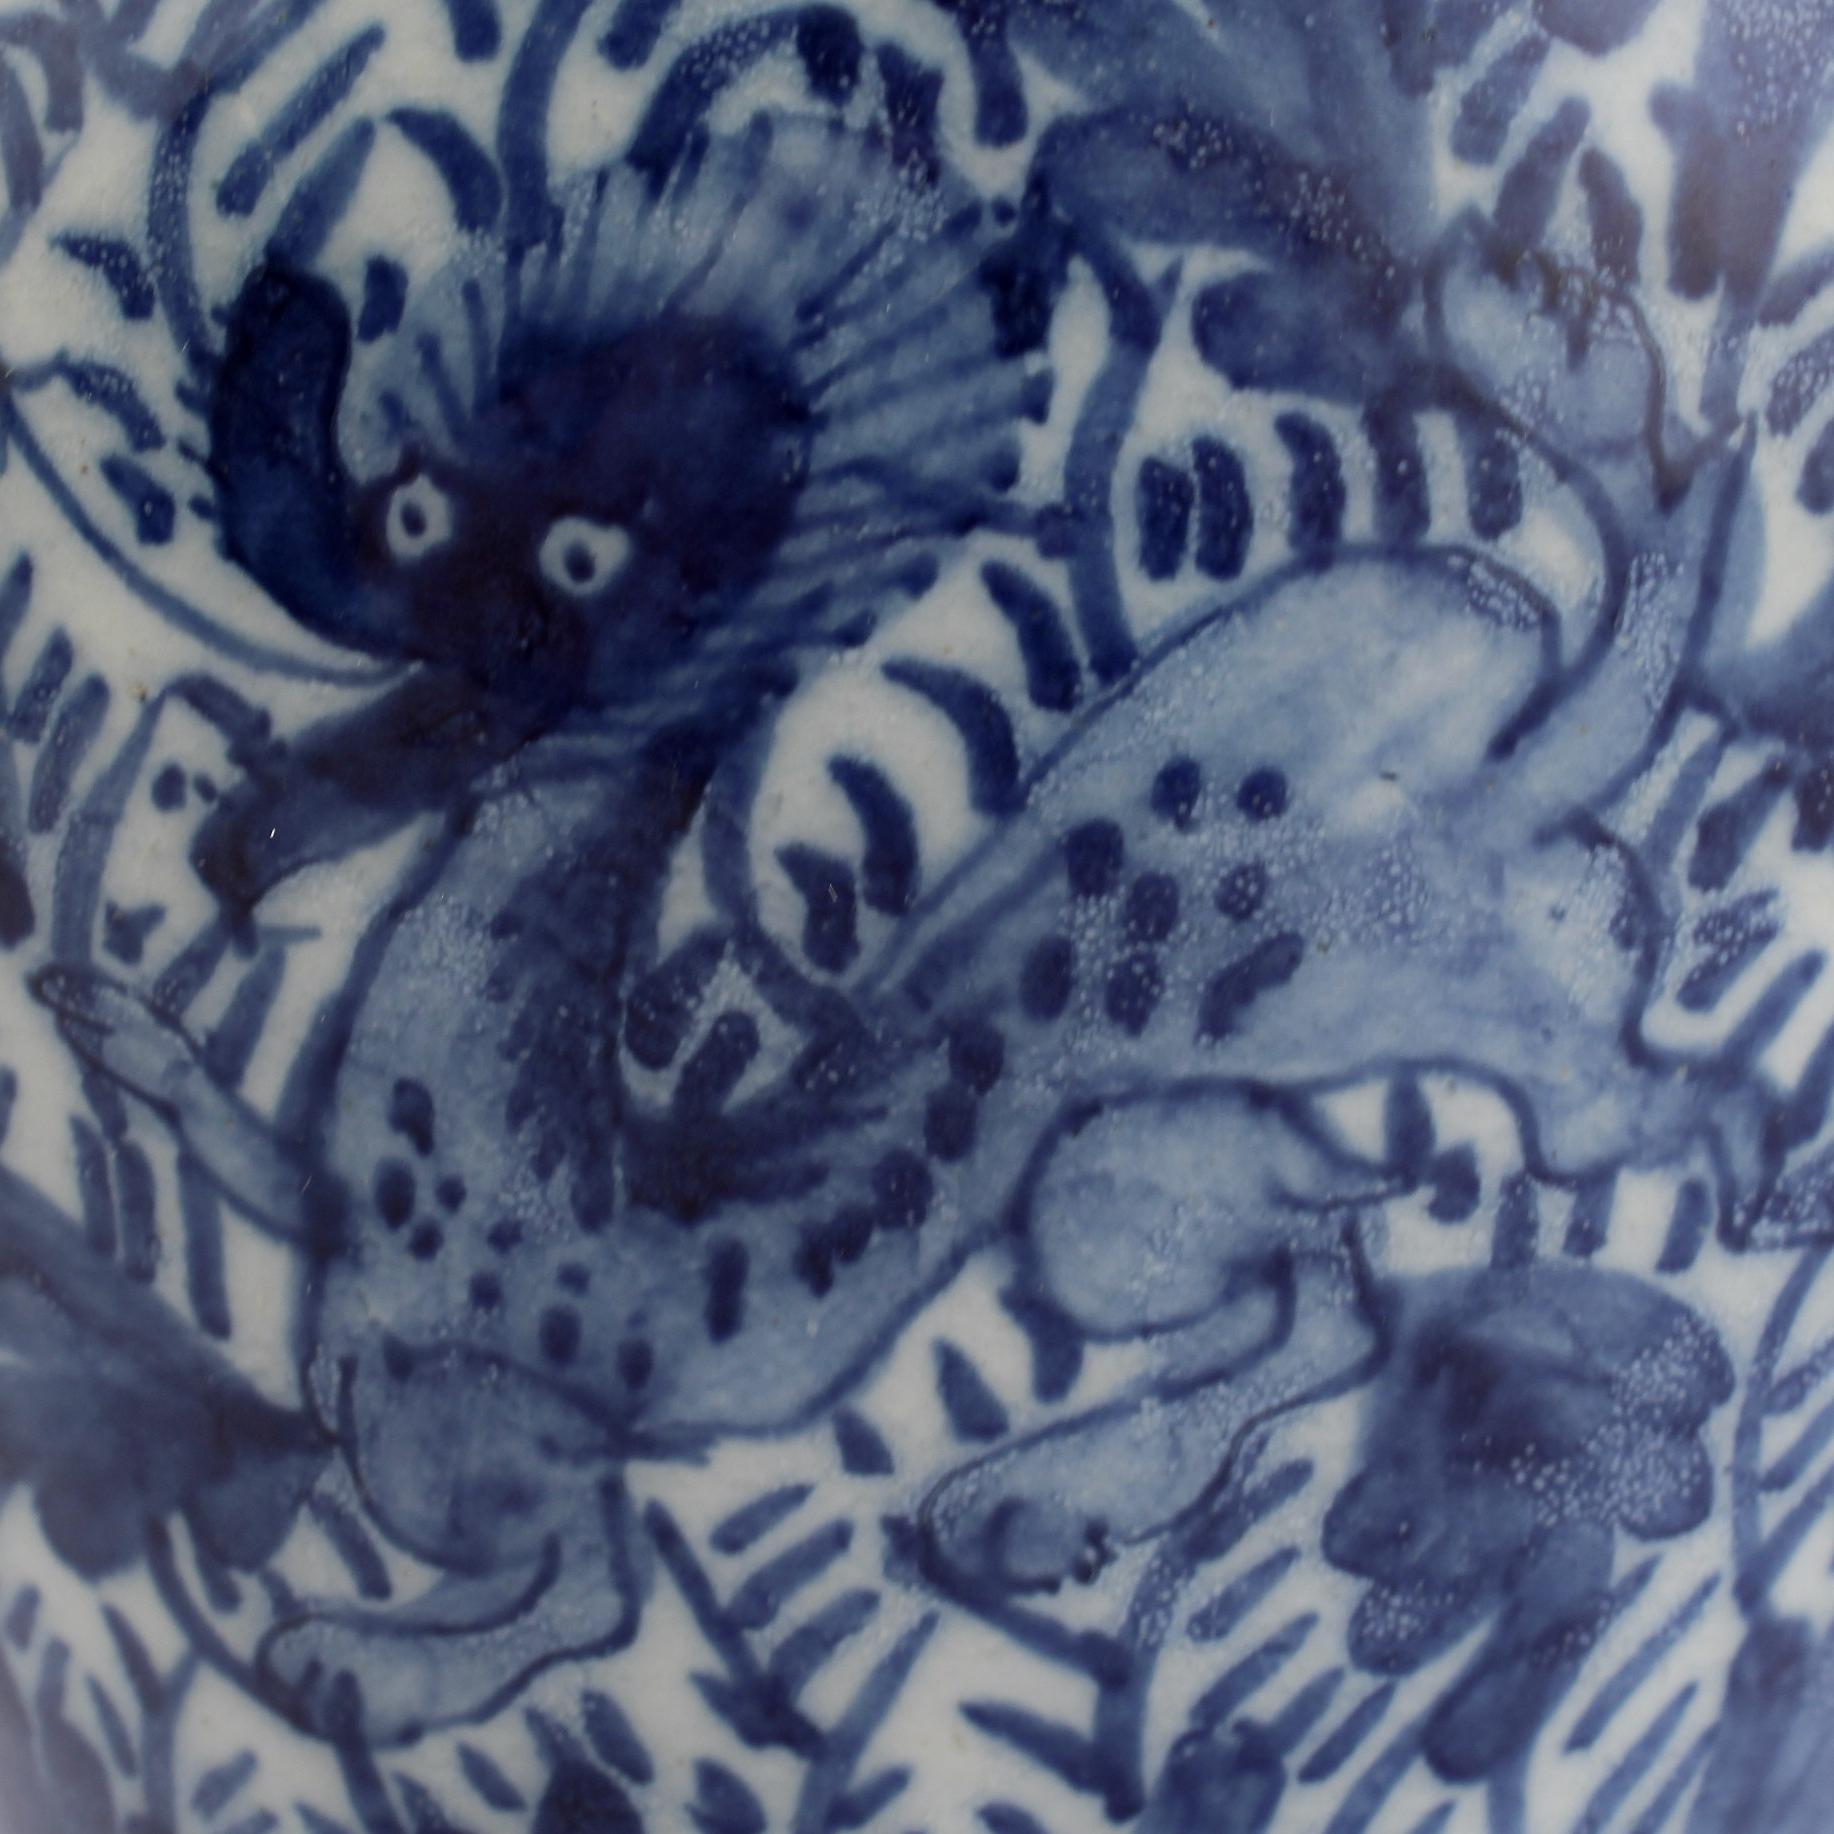 Antique 18th Century Dutch Delft Pottery Jar or Vessel 2